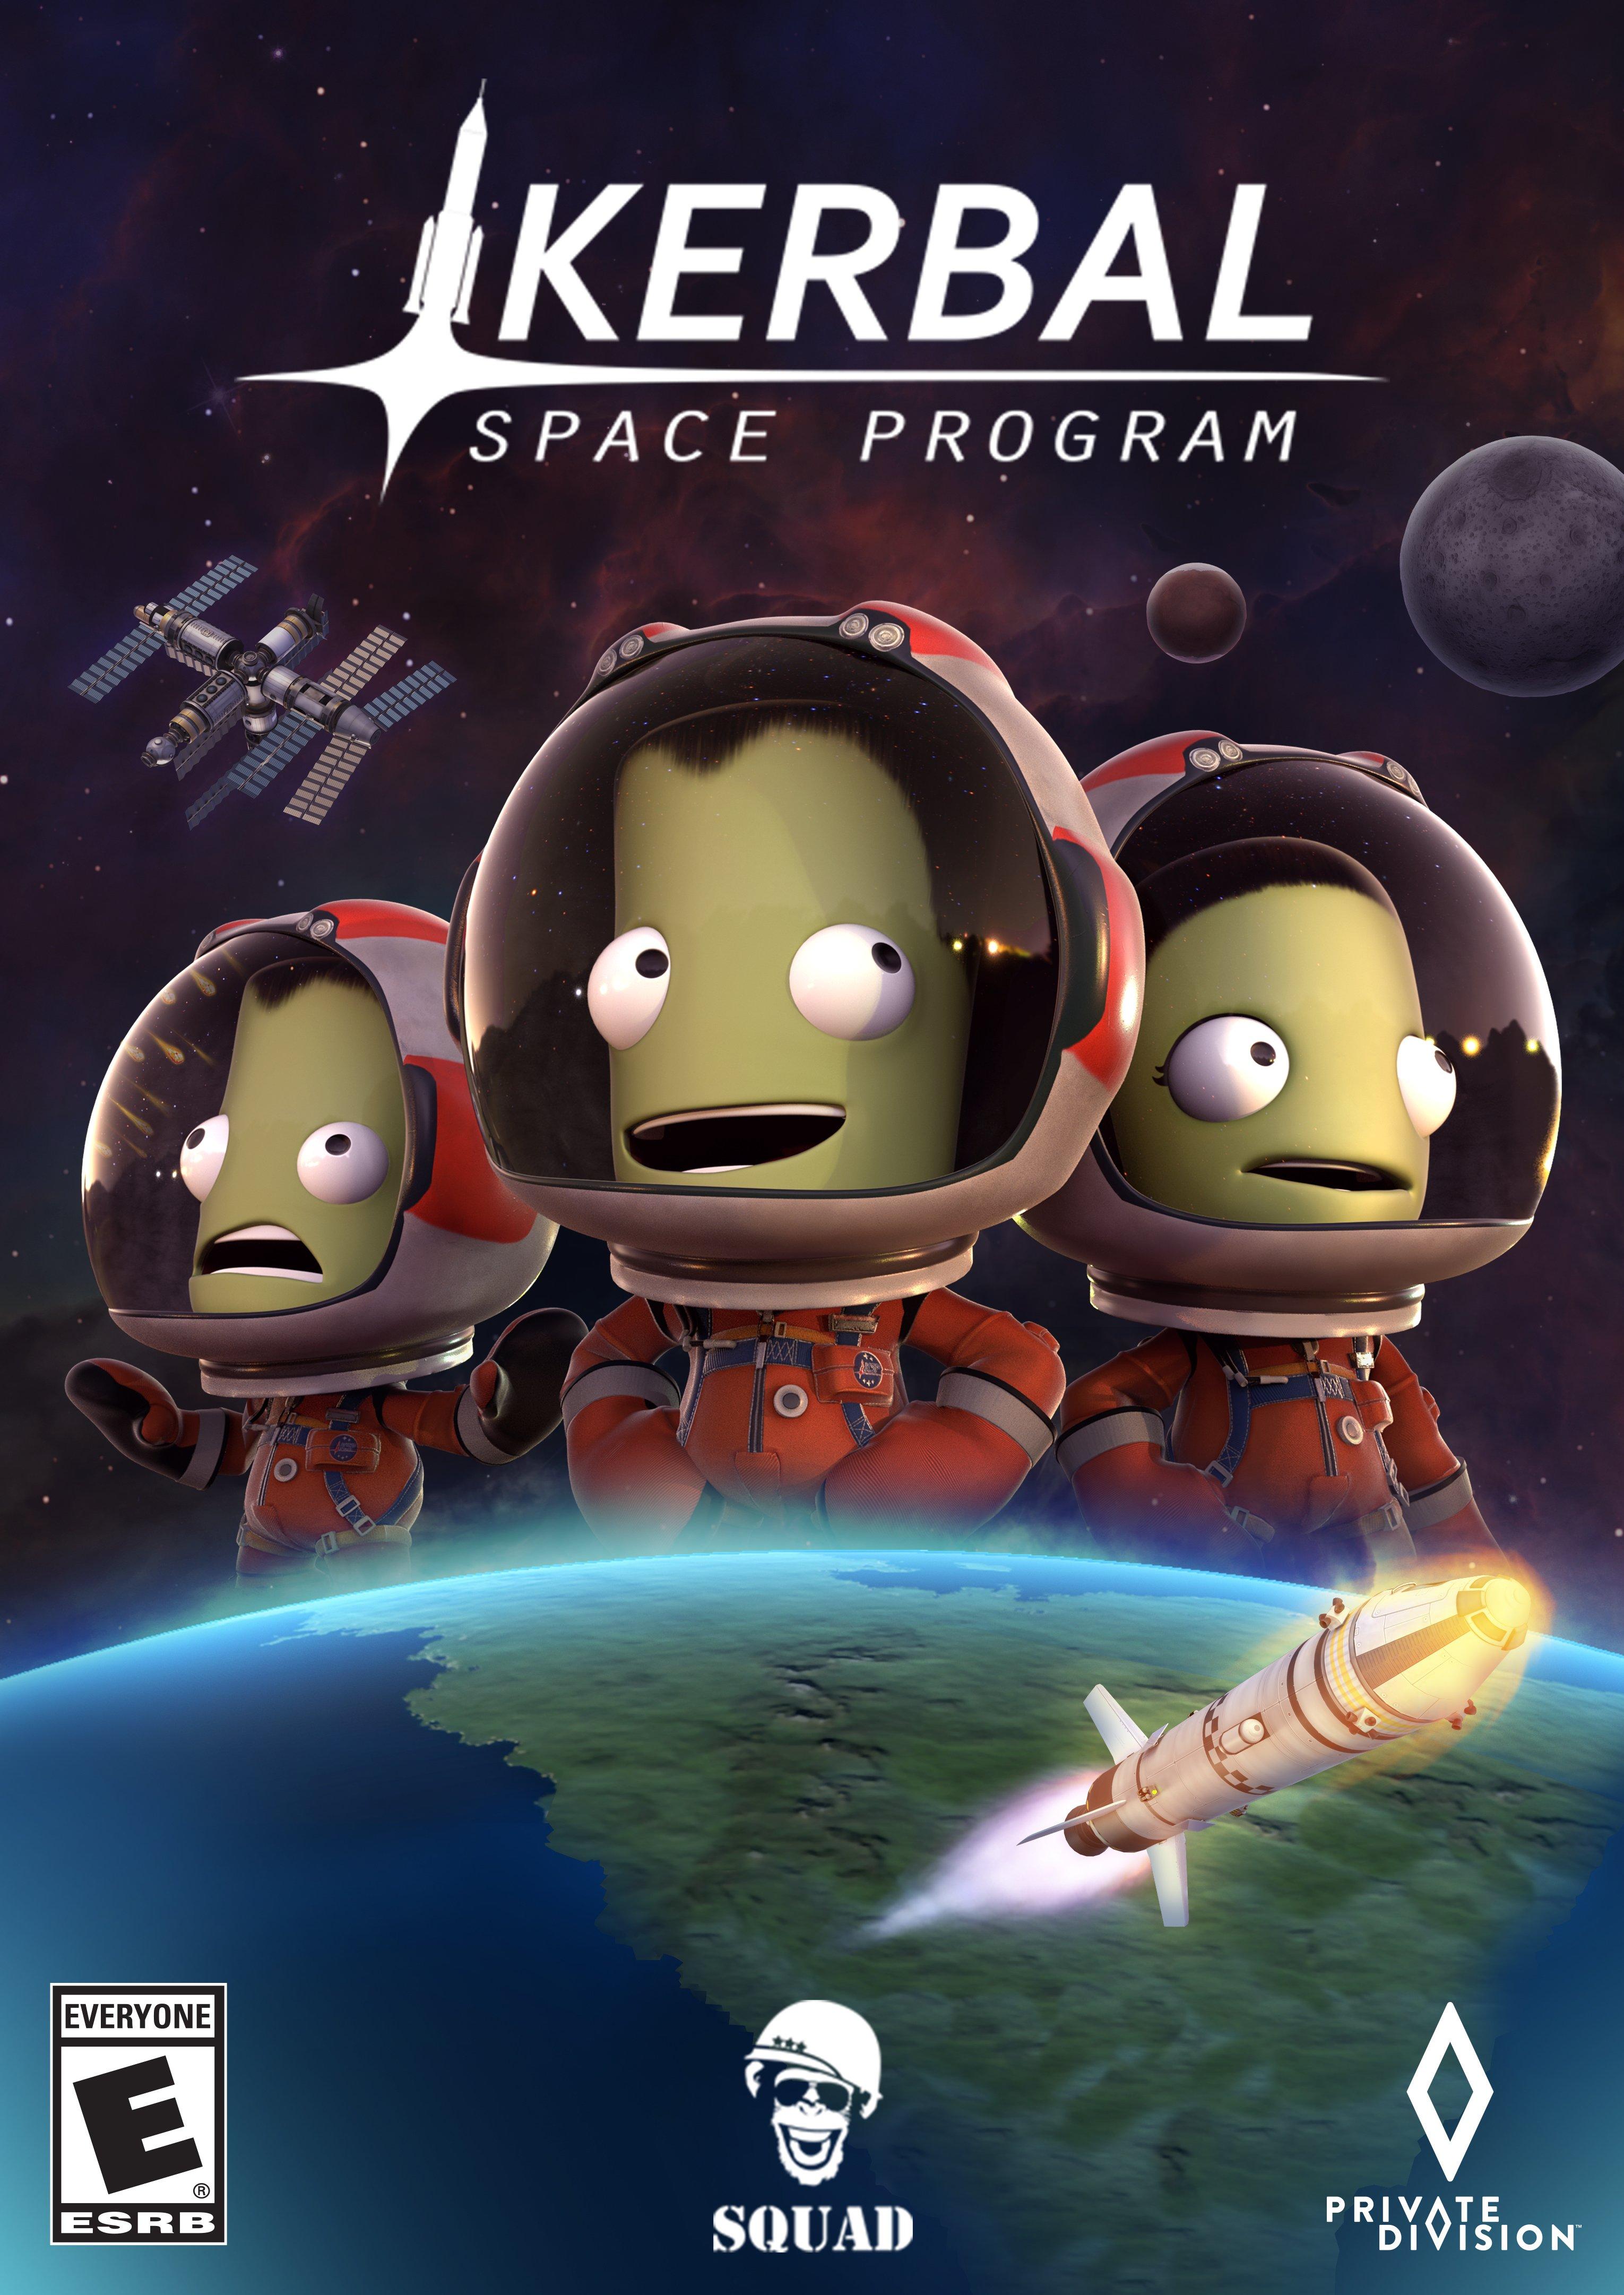 keeble space program